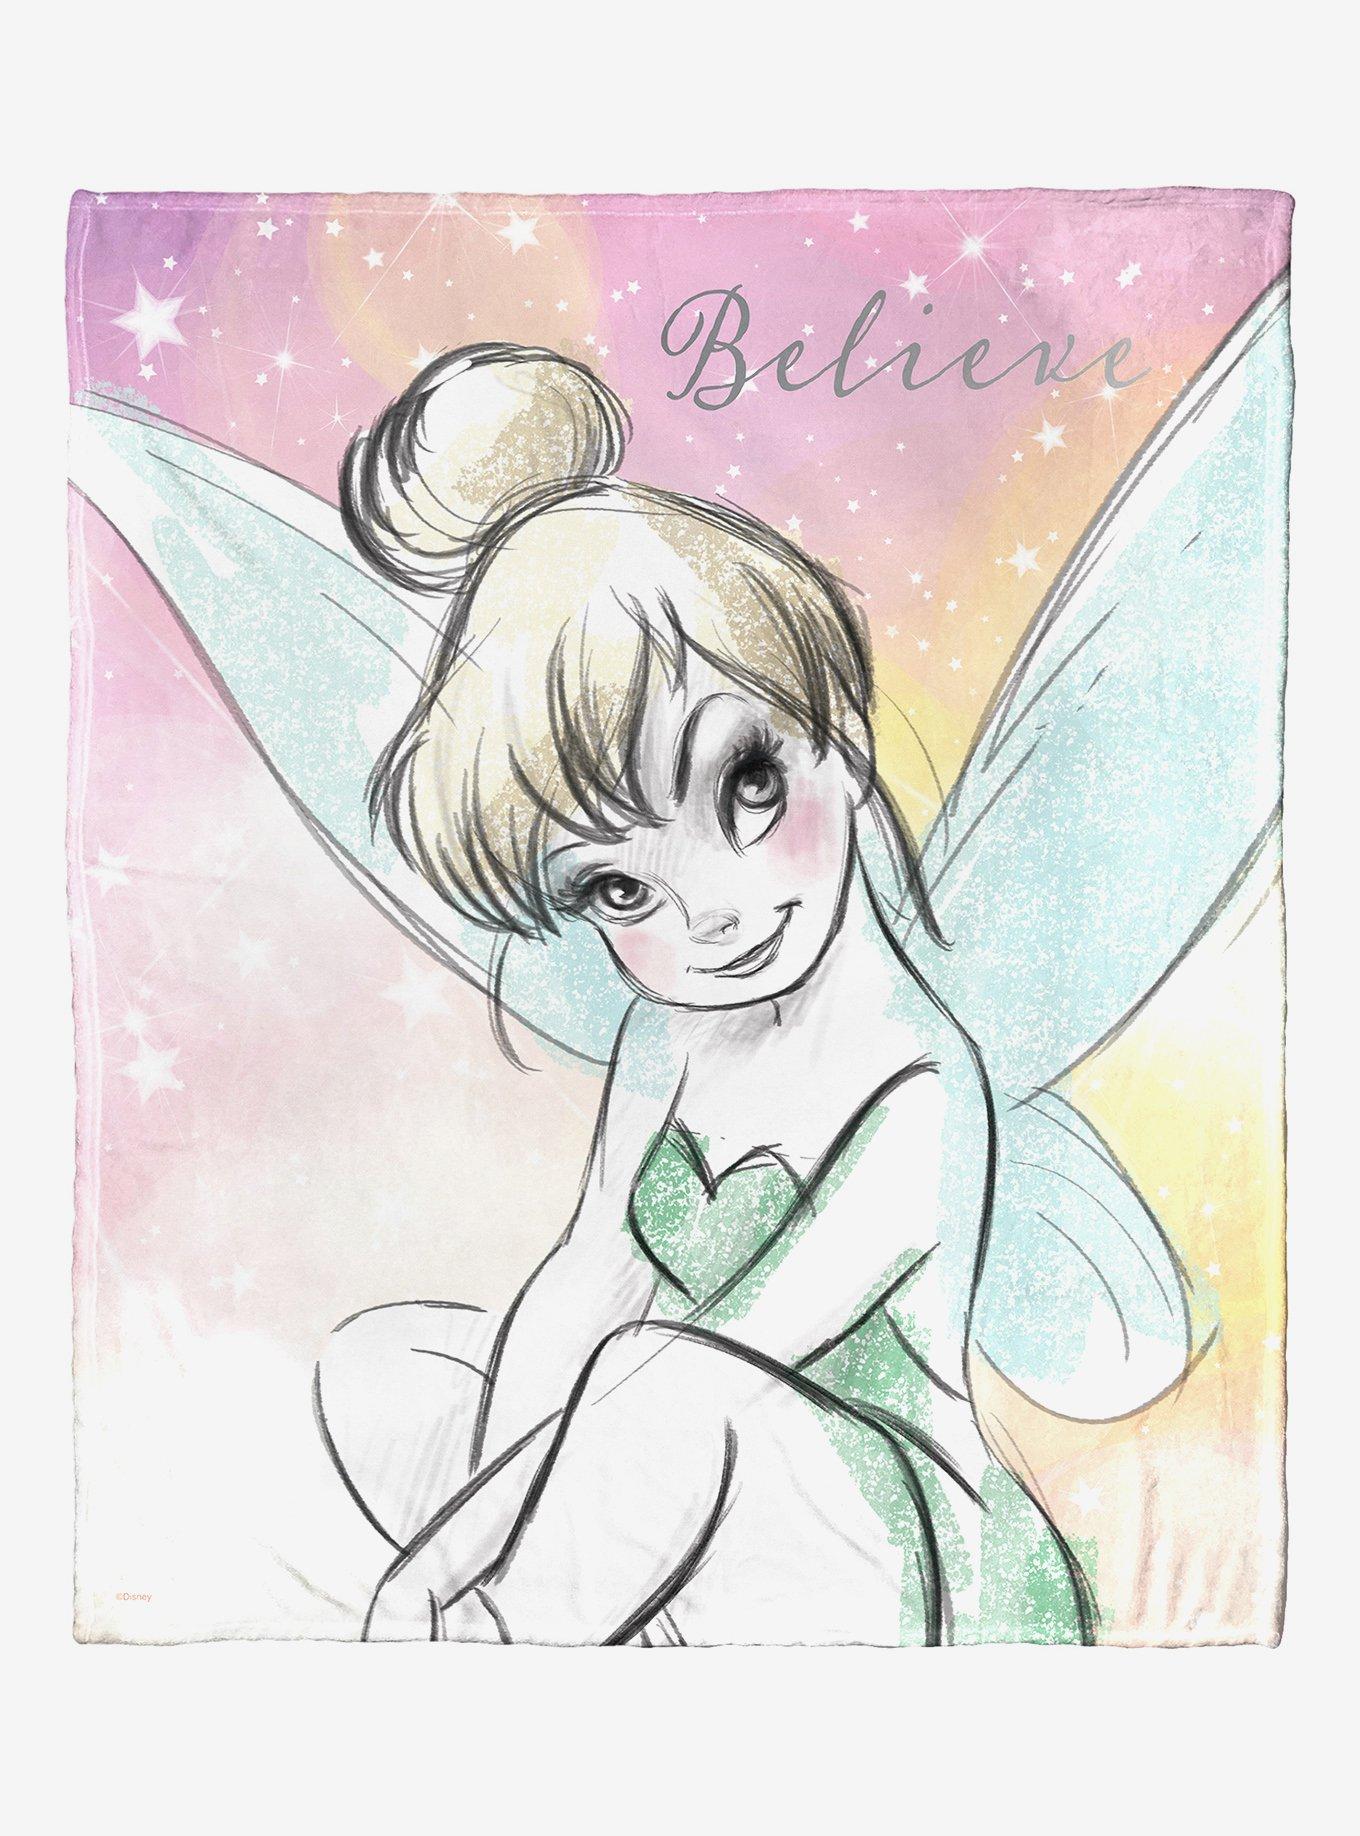 Disney Tinker Bell Sketchy Fairy Throw Blanket